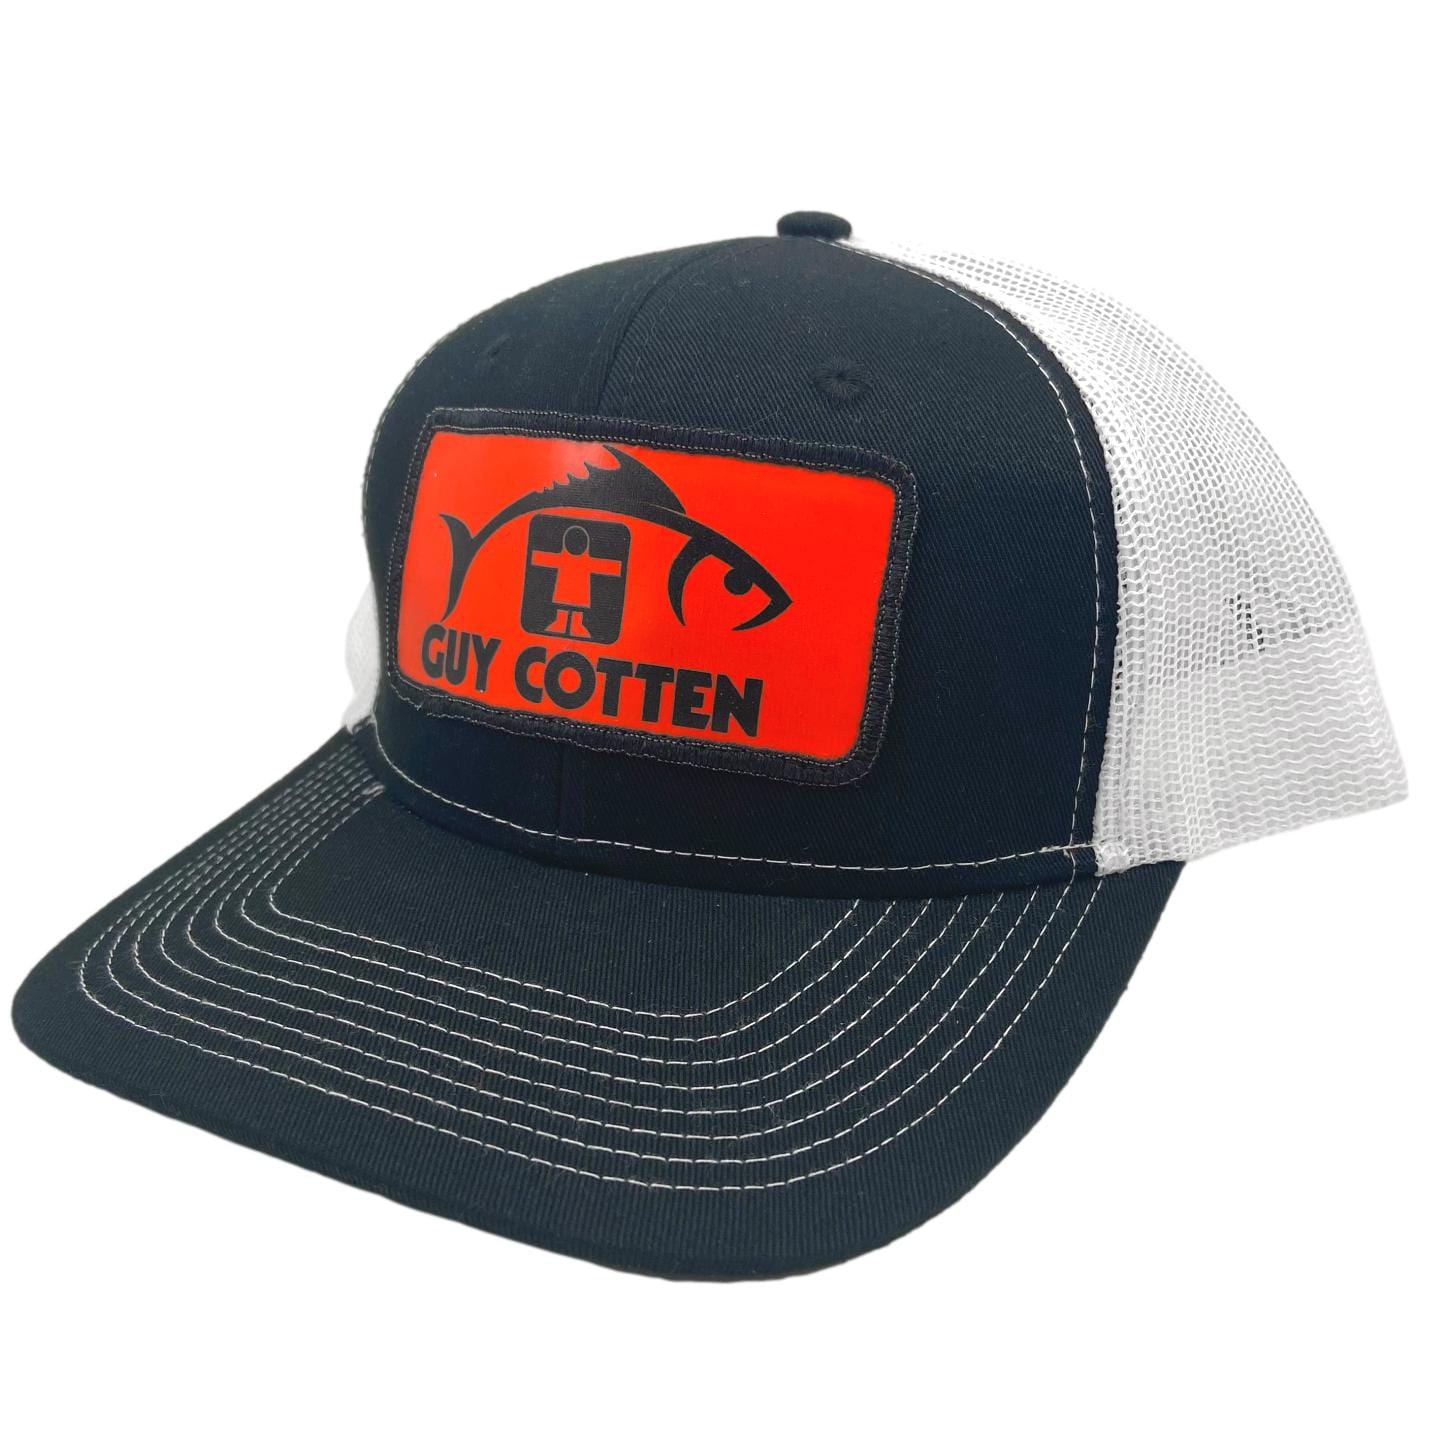 Guy Cotten Fish Trucker Hat